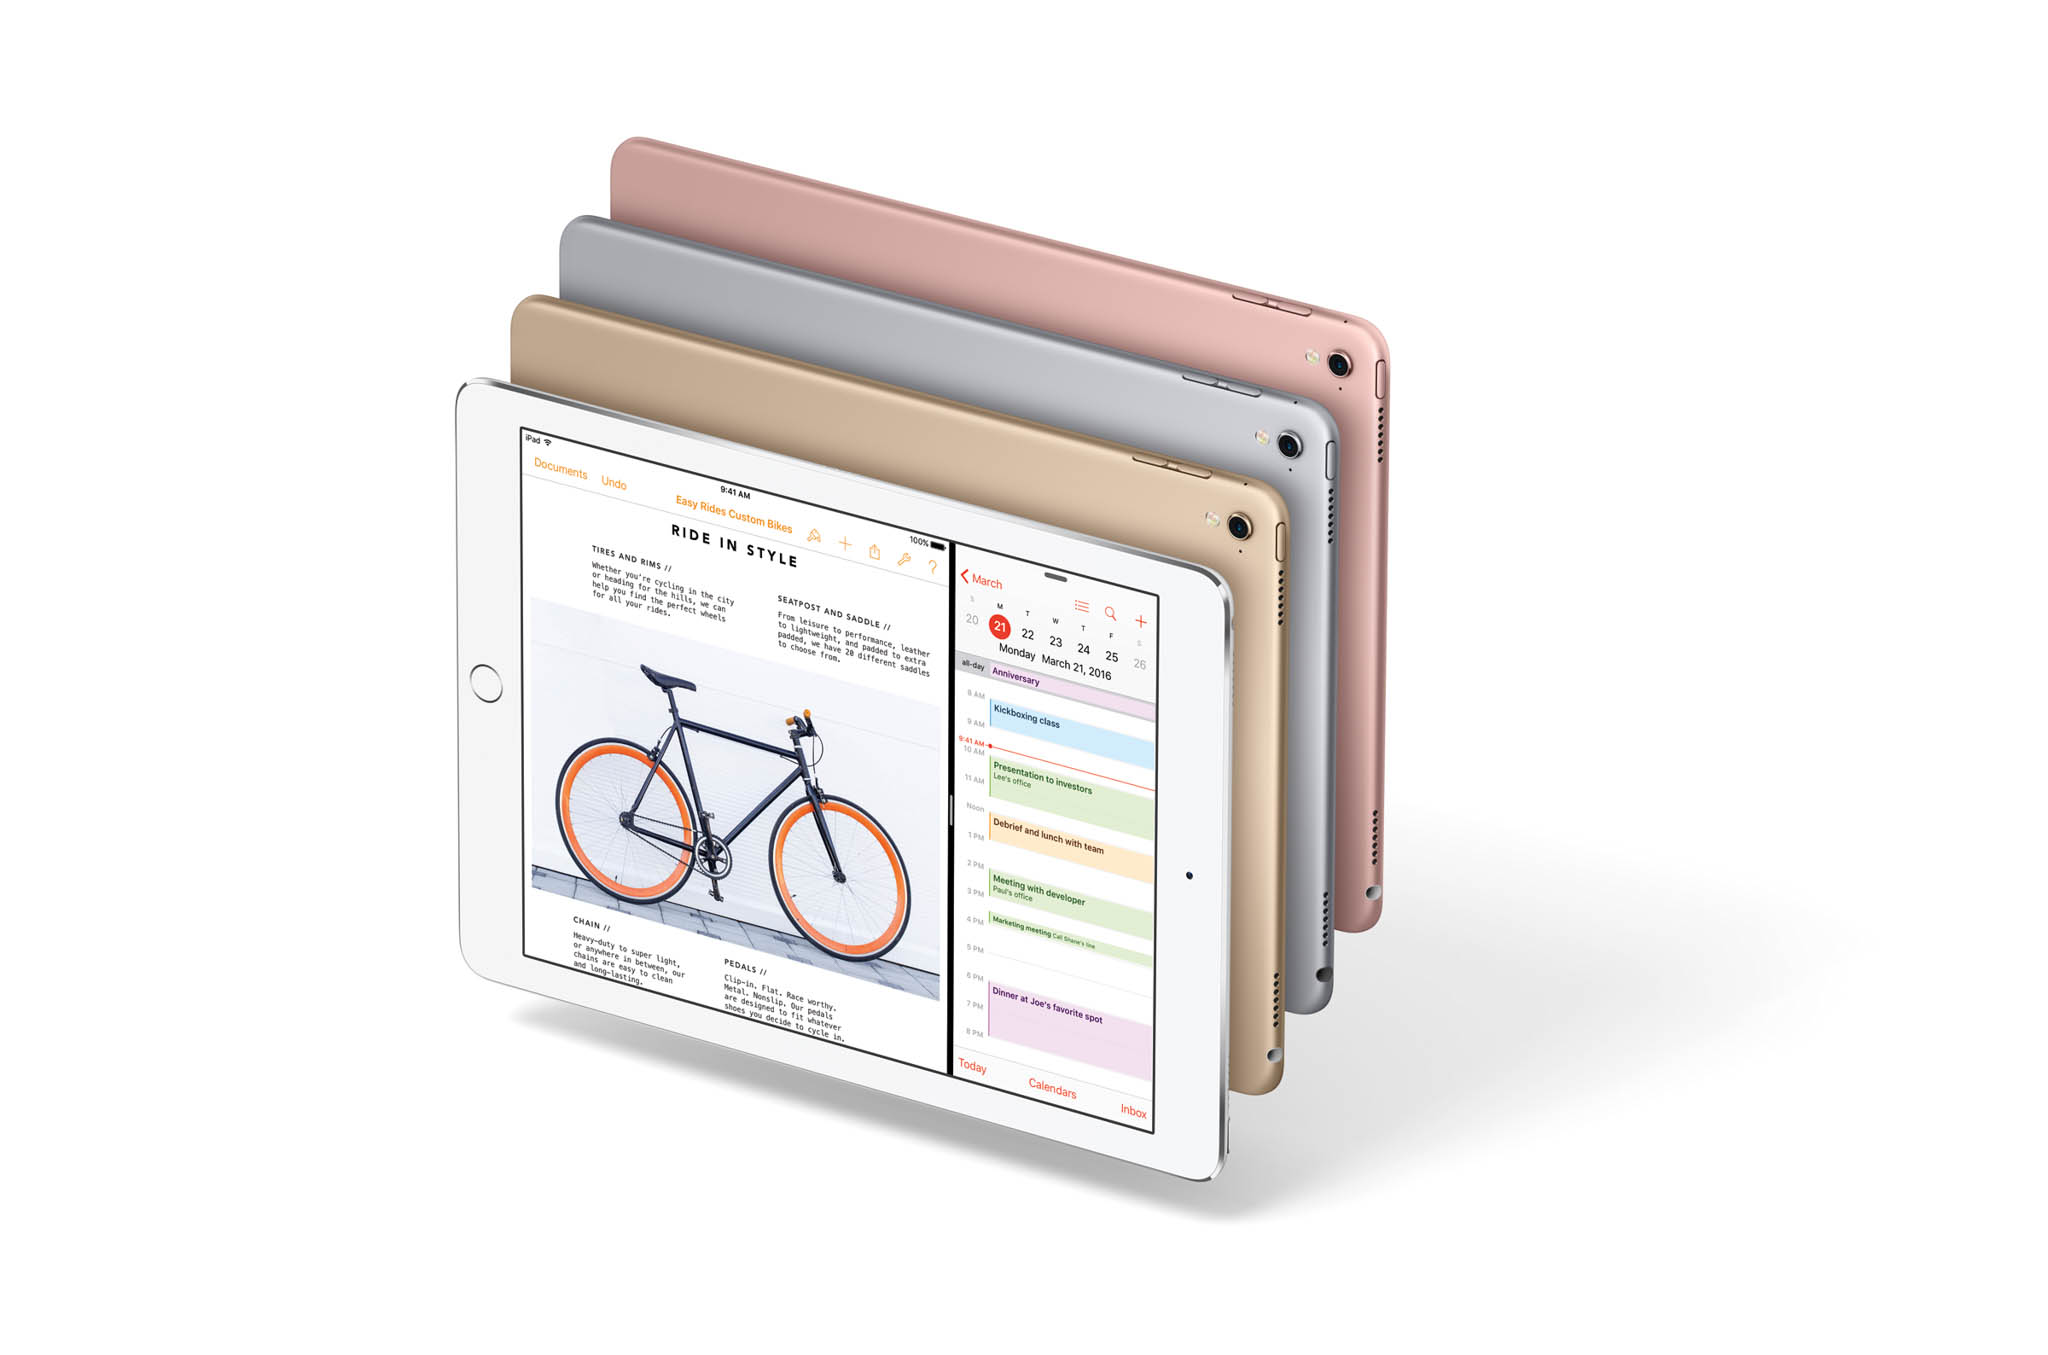 9.7-inch iPad Pro Model Colours